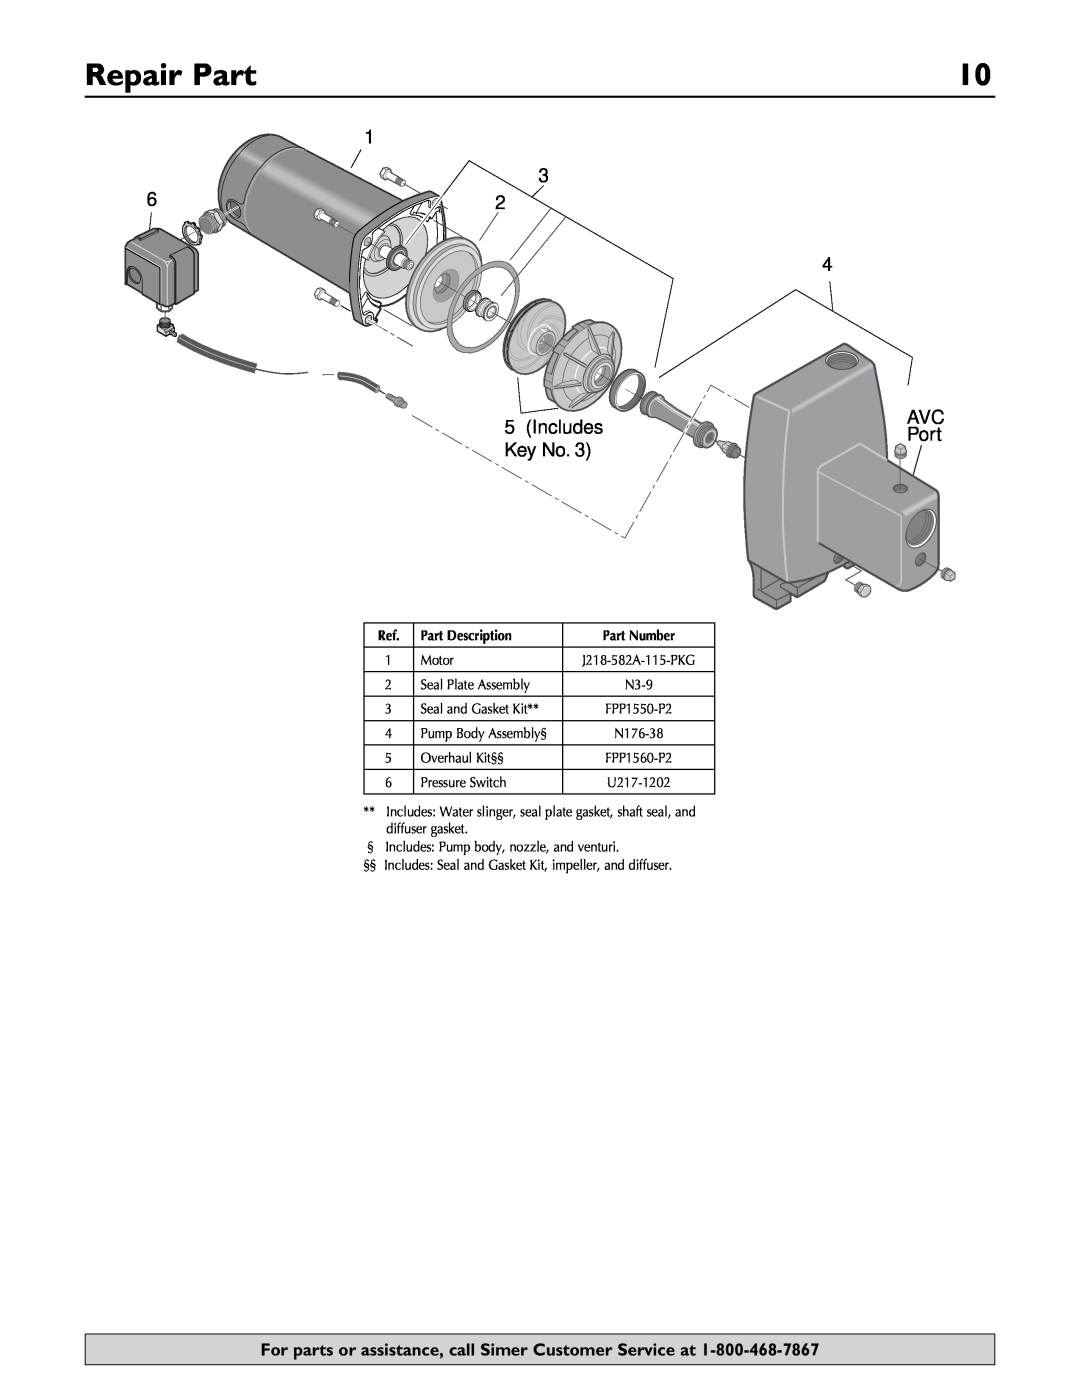 Simer Pumps 2806E owner manual Repair Part, Includes, Port, Key No, Part Description, Part Number 